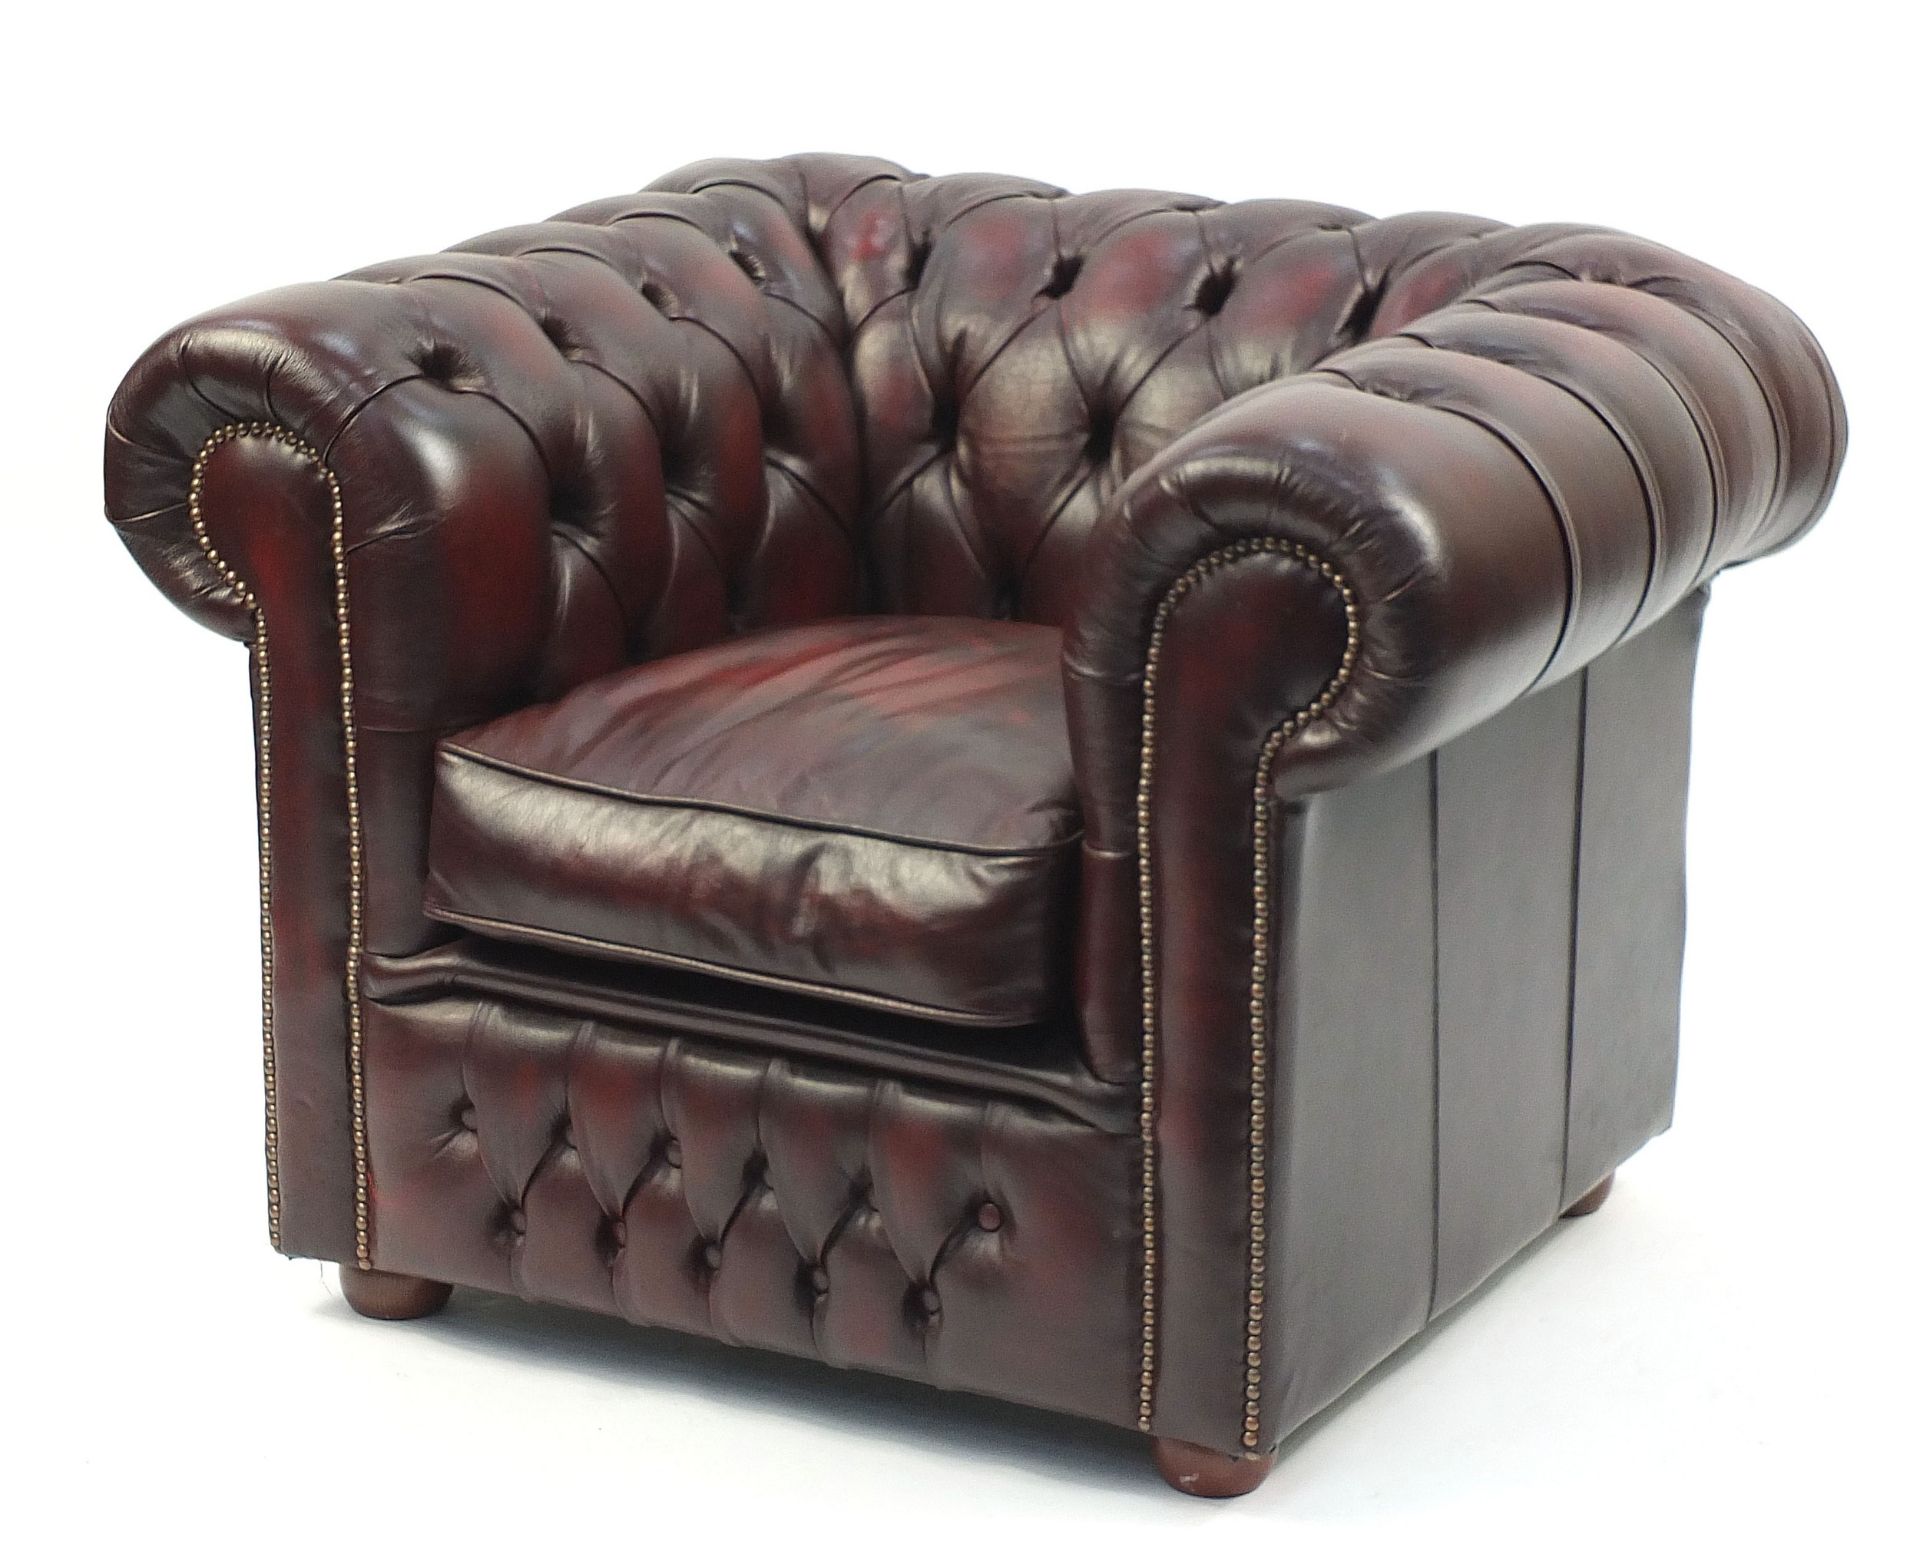 Ox blood leather Chesterfield club chair, 75cm H x 100cm W x 85cm D